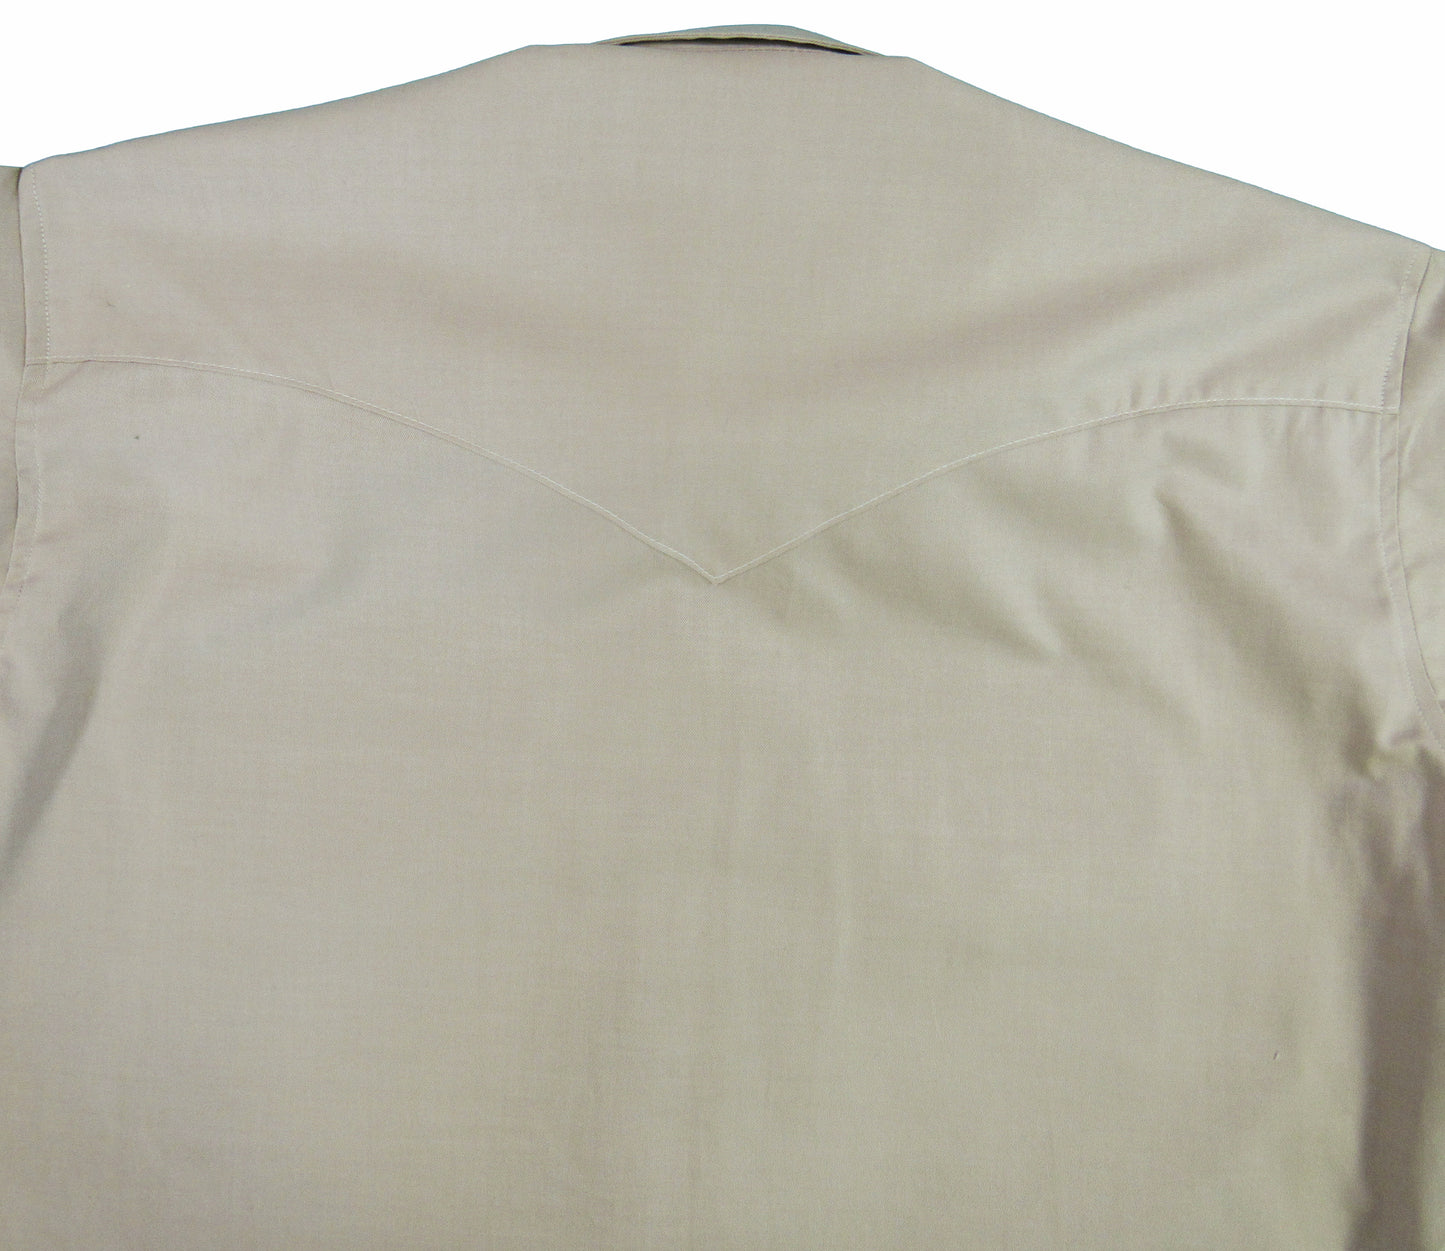 Flying R Ranchwear - Blazer Solids - Sandy Tan - Long Sleeve